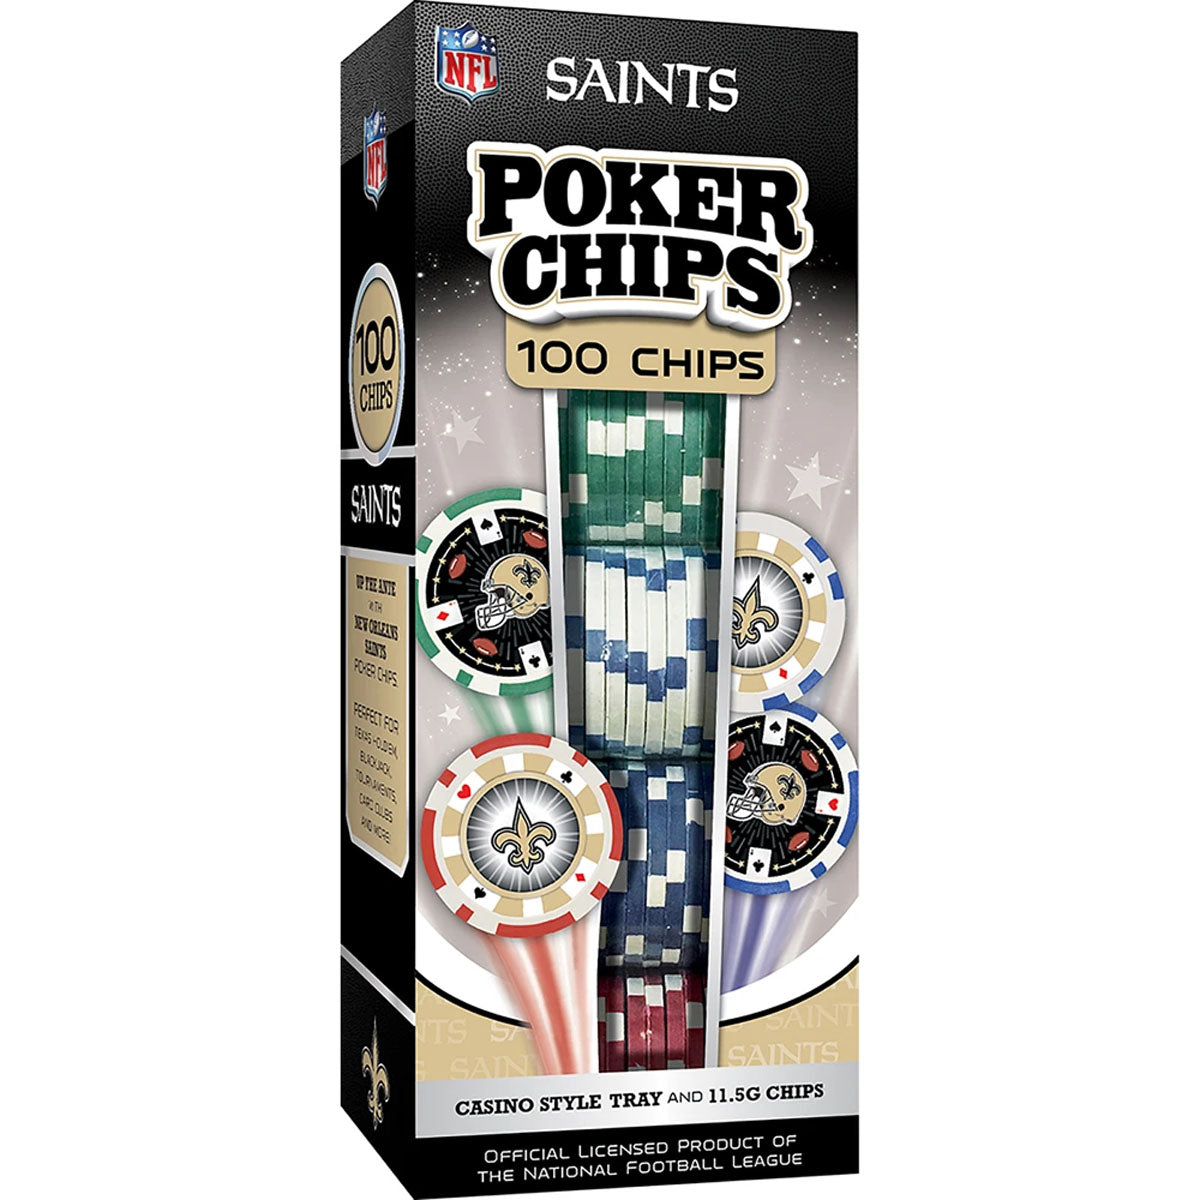 New Orleans Saints Poker Chips, 100 Chips